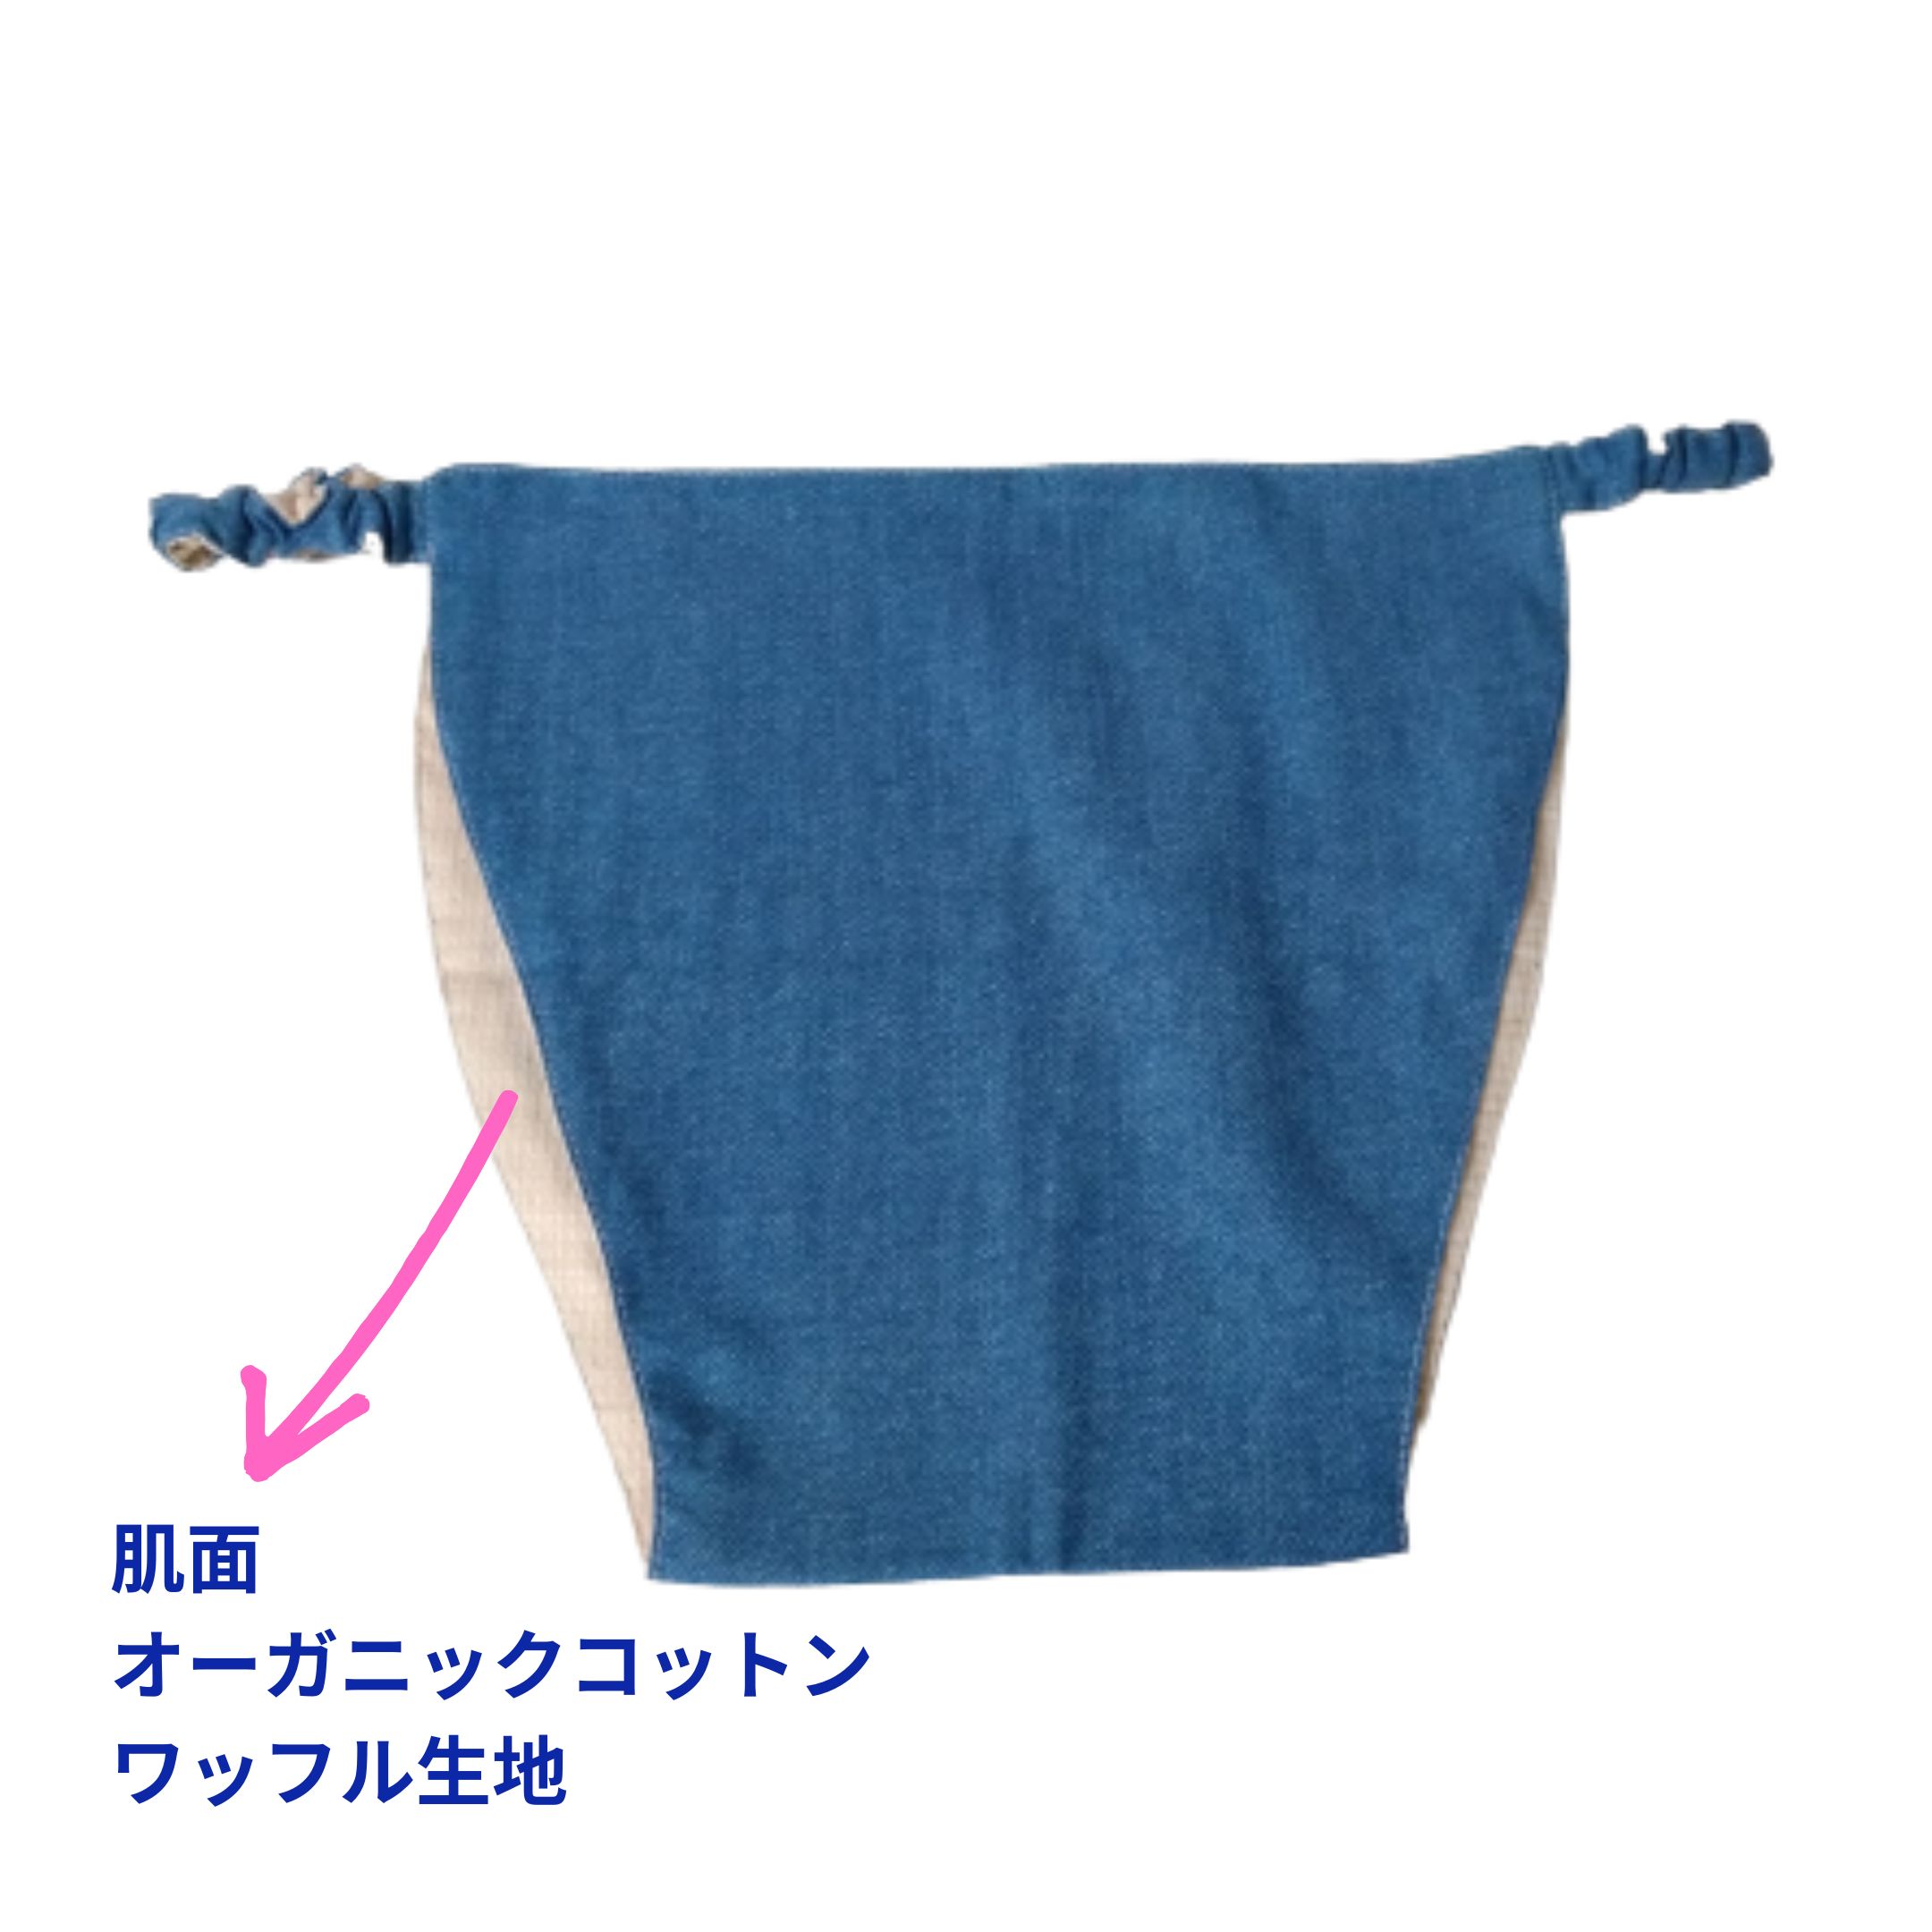  for man fundoshi pants men's underwear pants 1 sheets relax tighten attaching not organic cotton Denim manner W gauze light blue MF-1